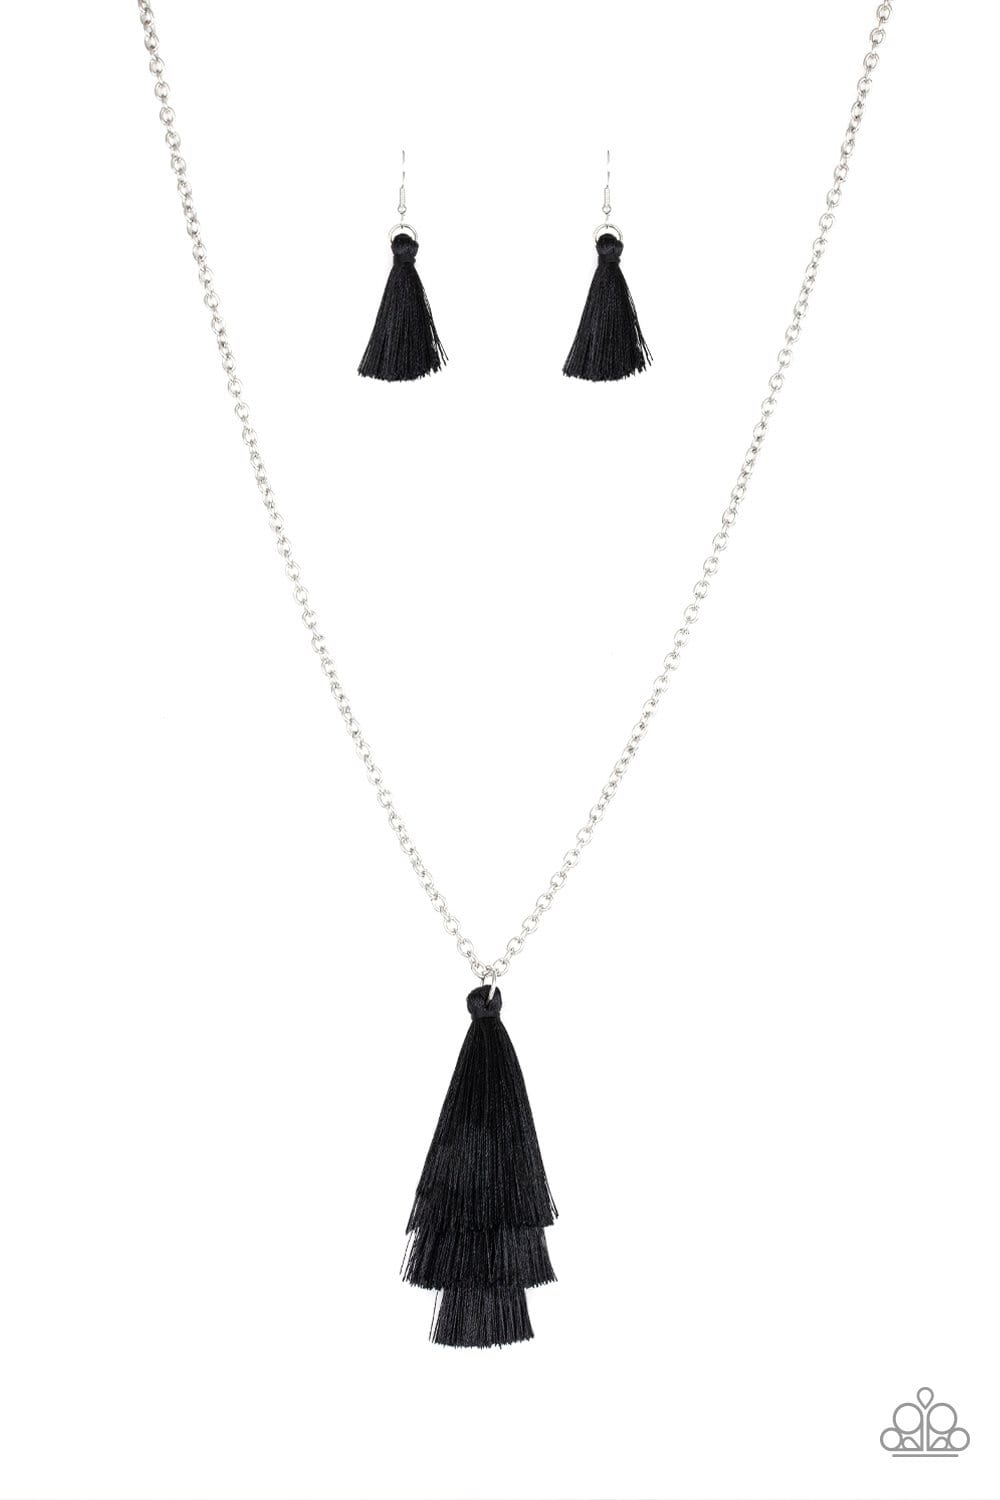 Triple The Tassel - Black Necklace